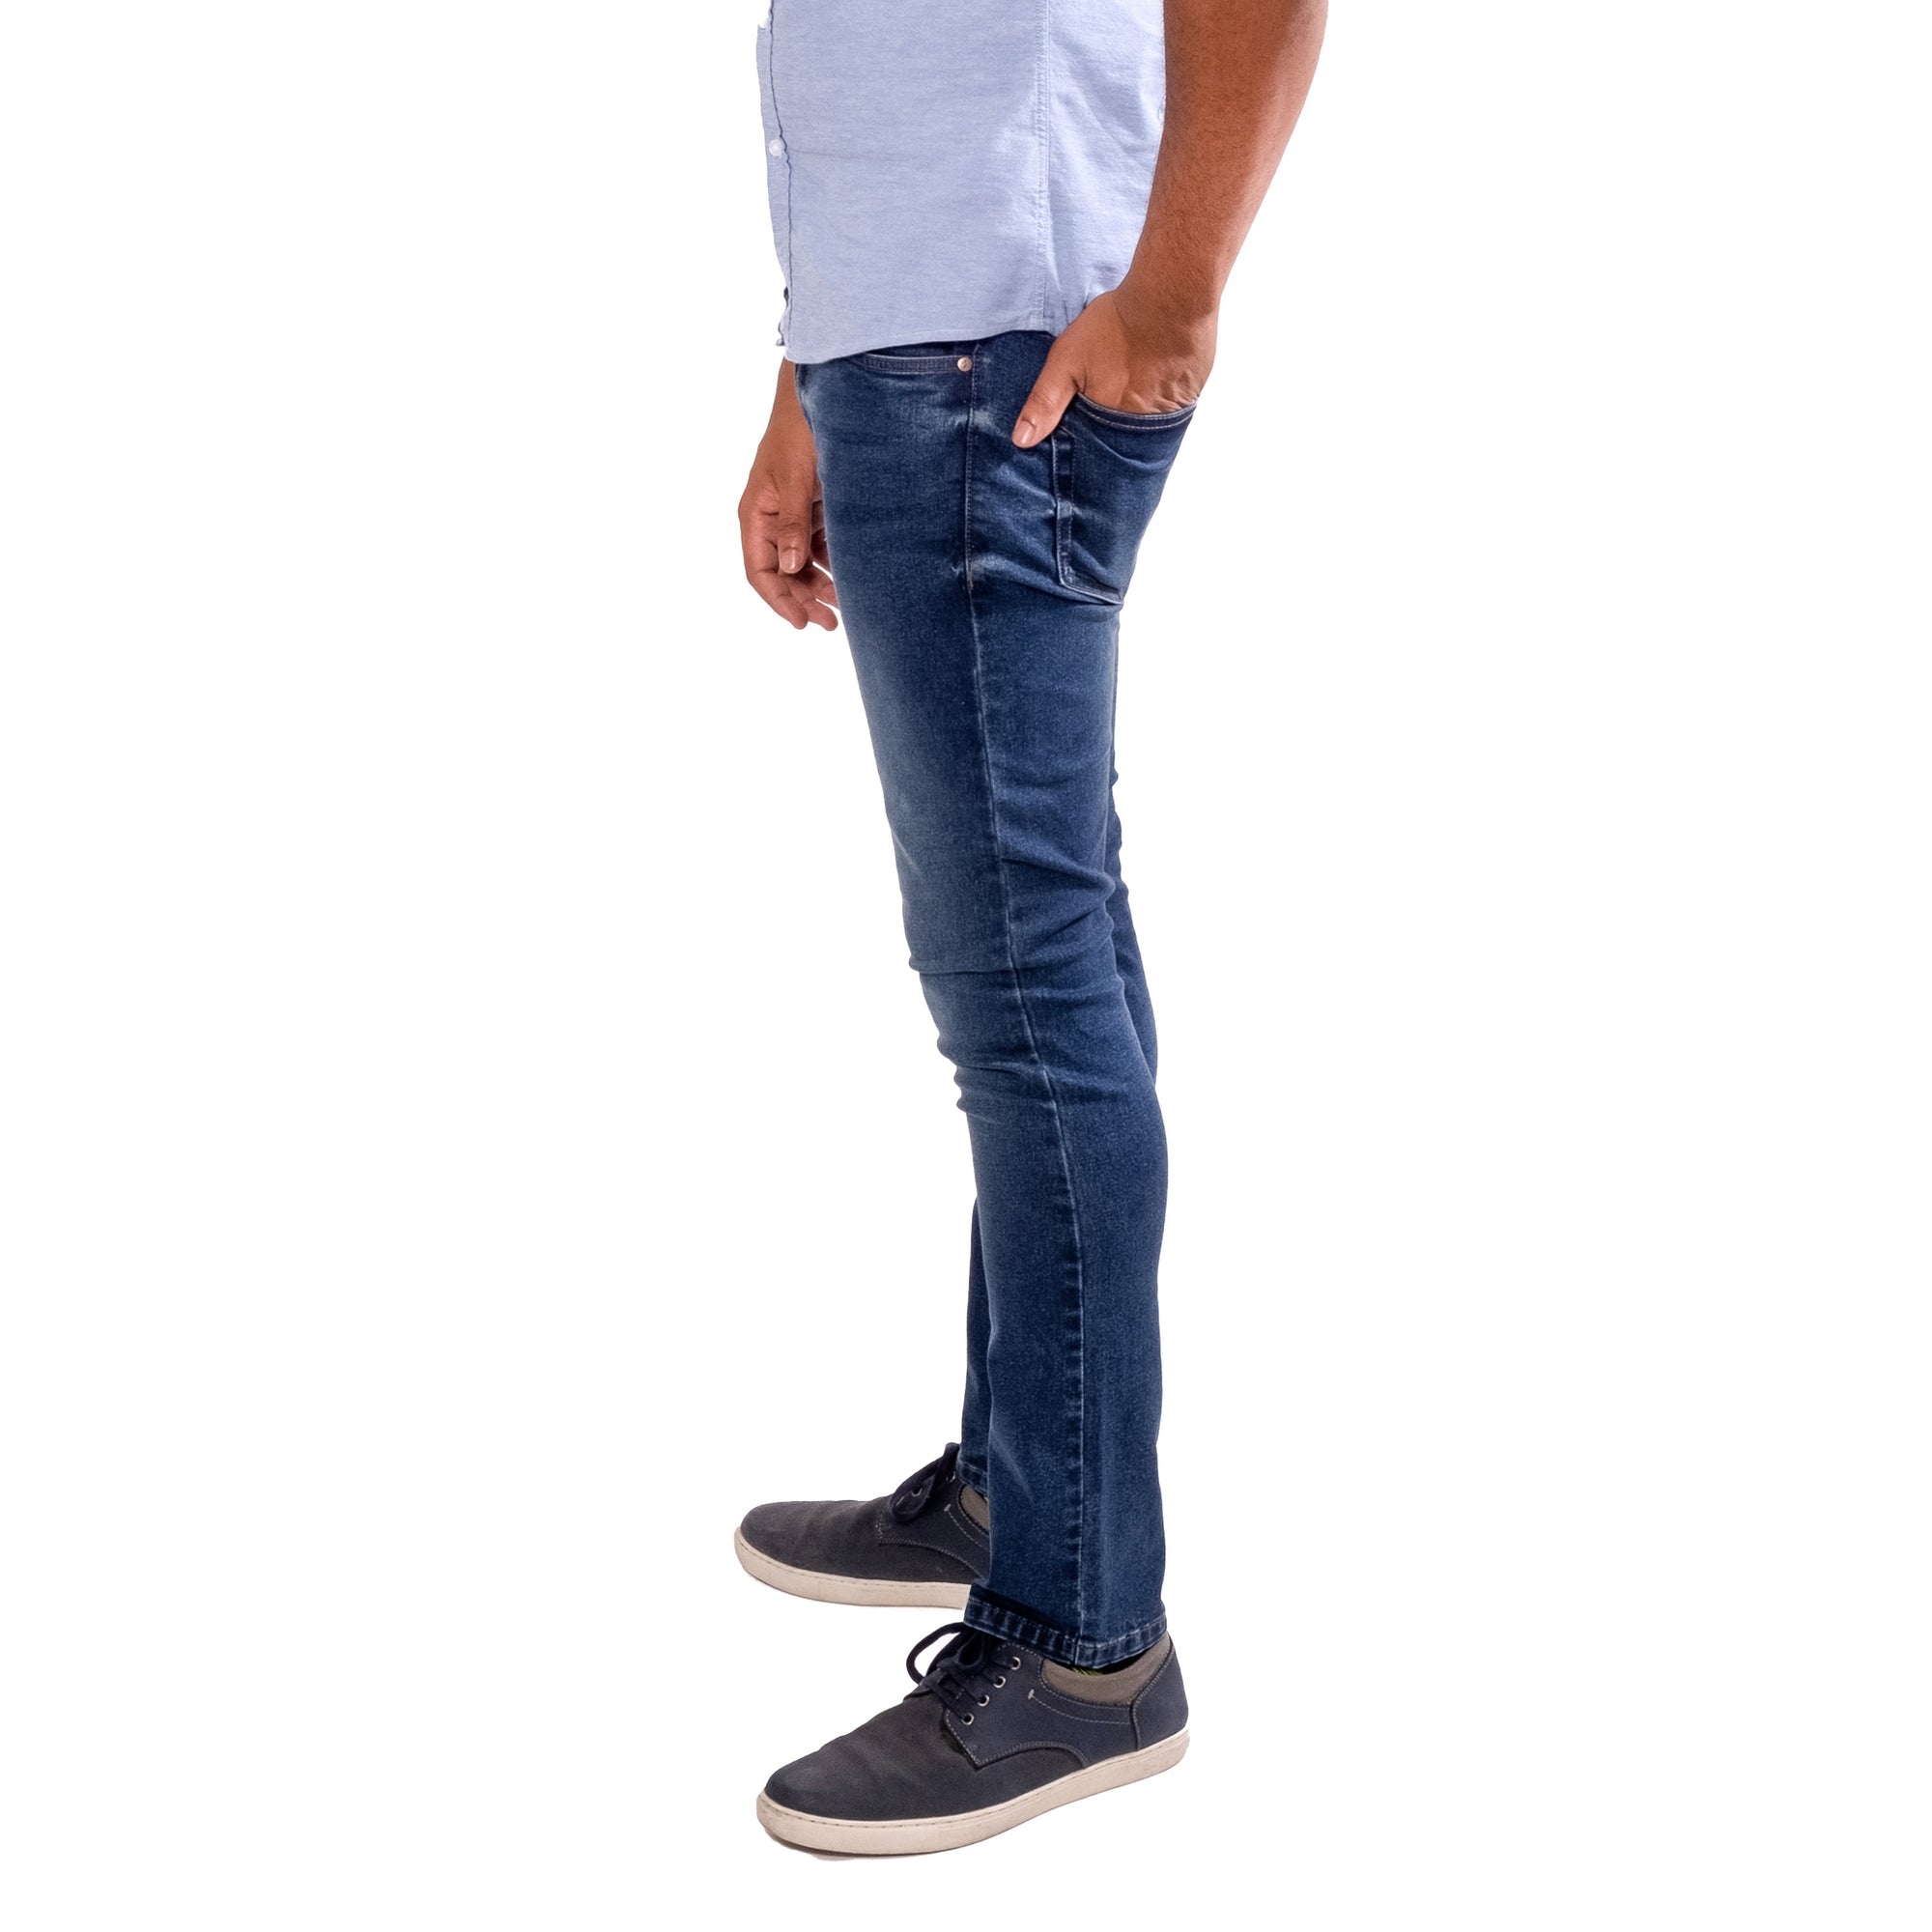 Pantalon jean bleu clair skinny confortable homme fashion